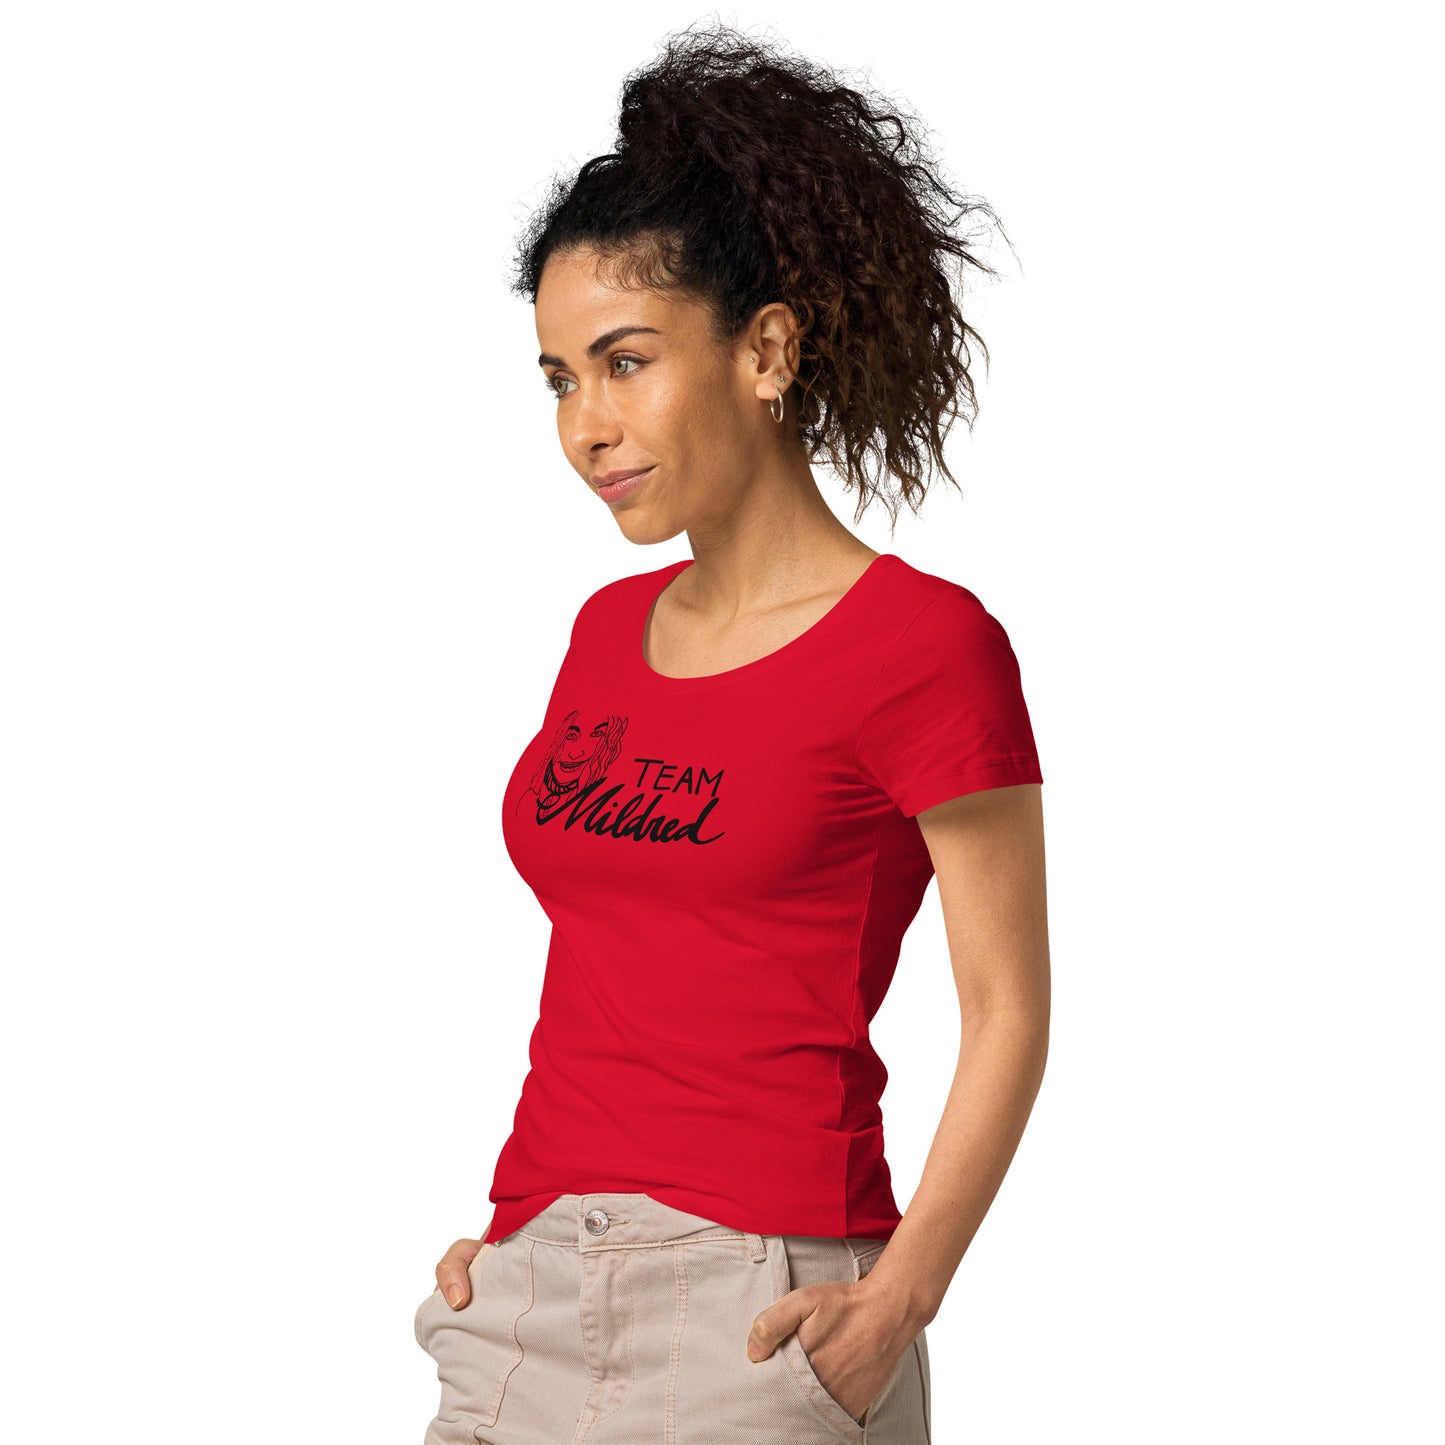 Team Mildred Women’s Basic Organic T-Shirt